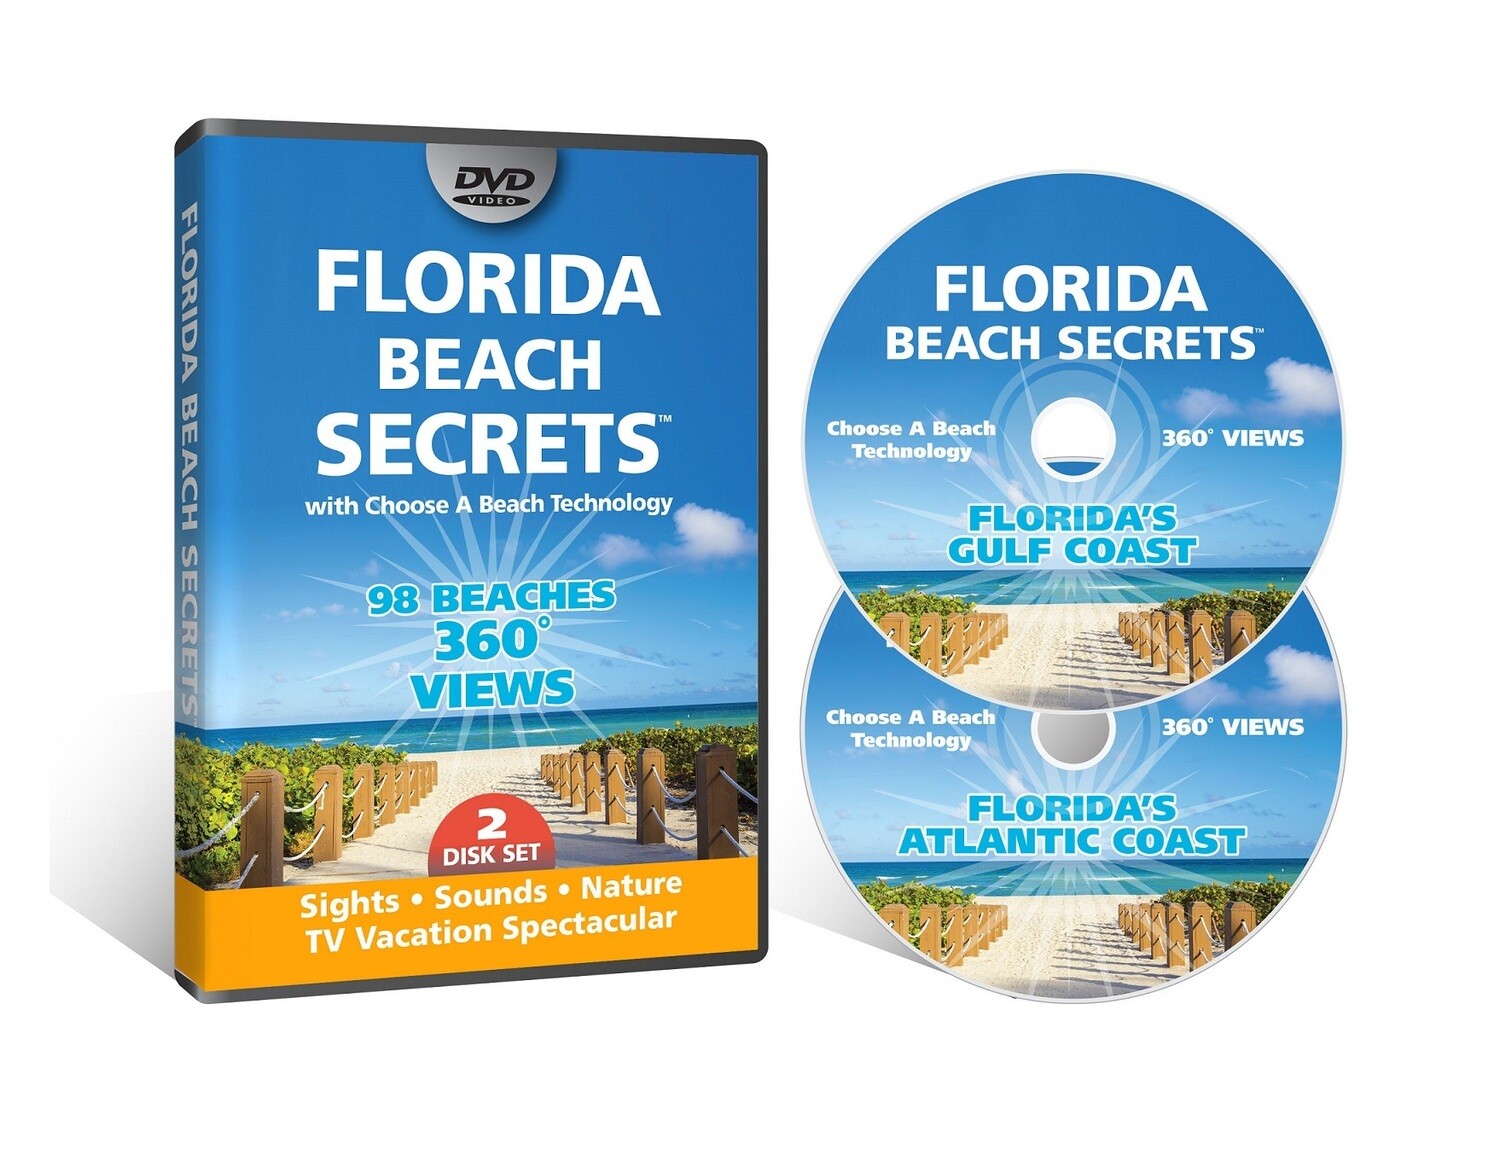 Florida Beach Secrets
2 Disc DVD SET